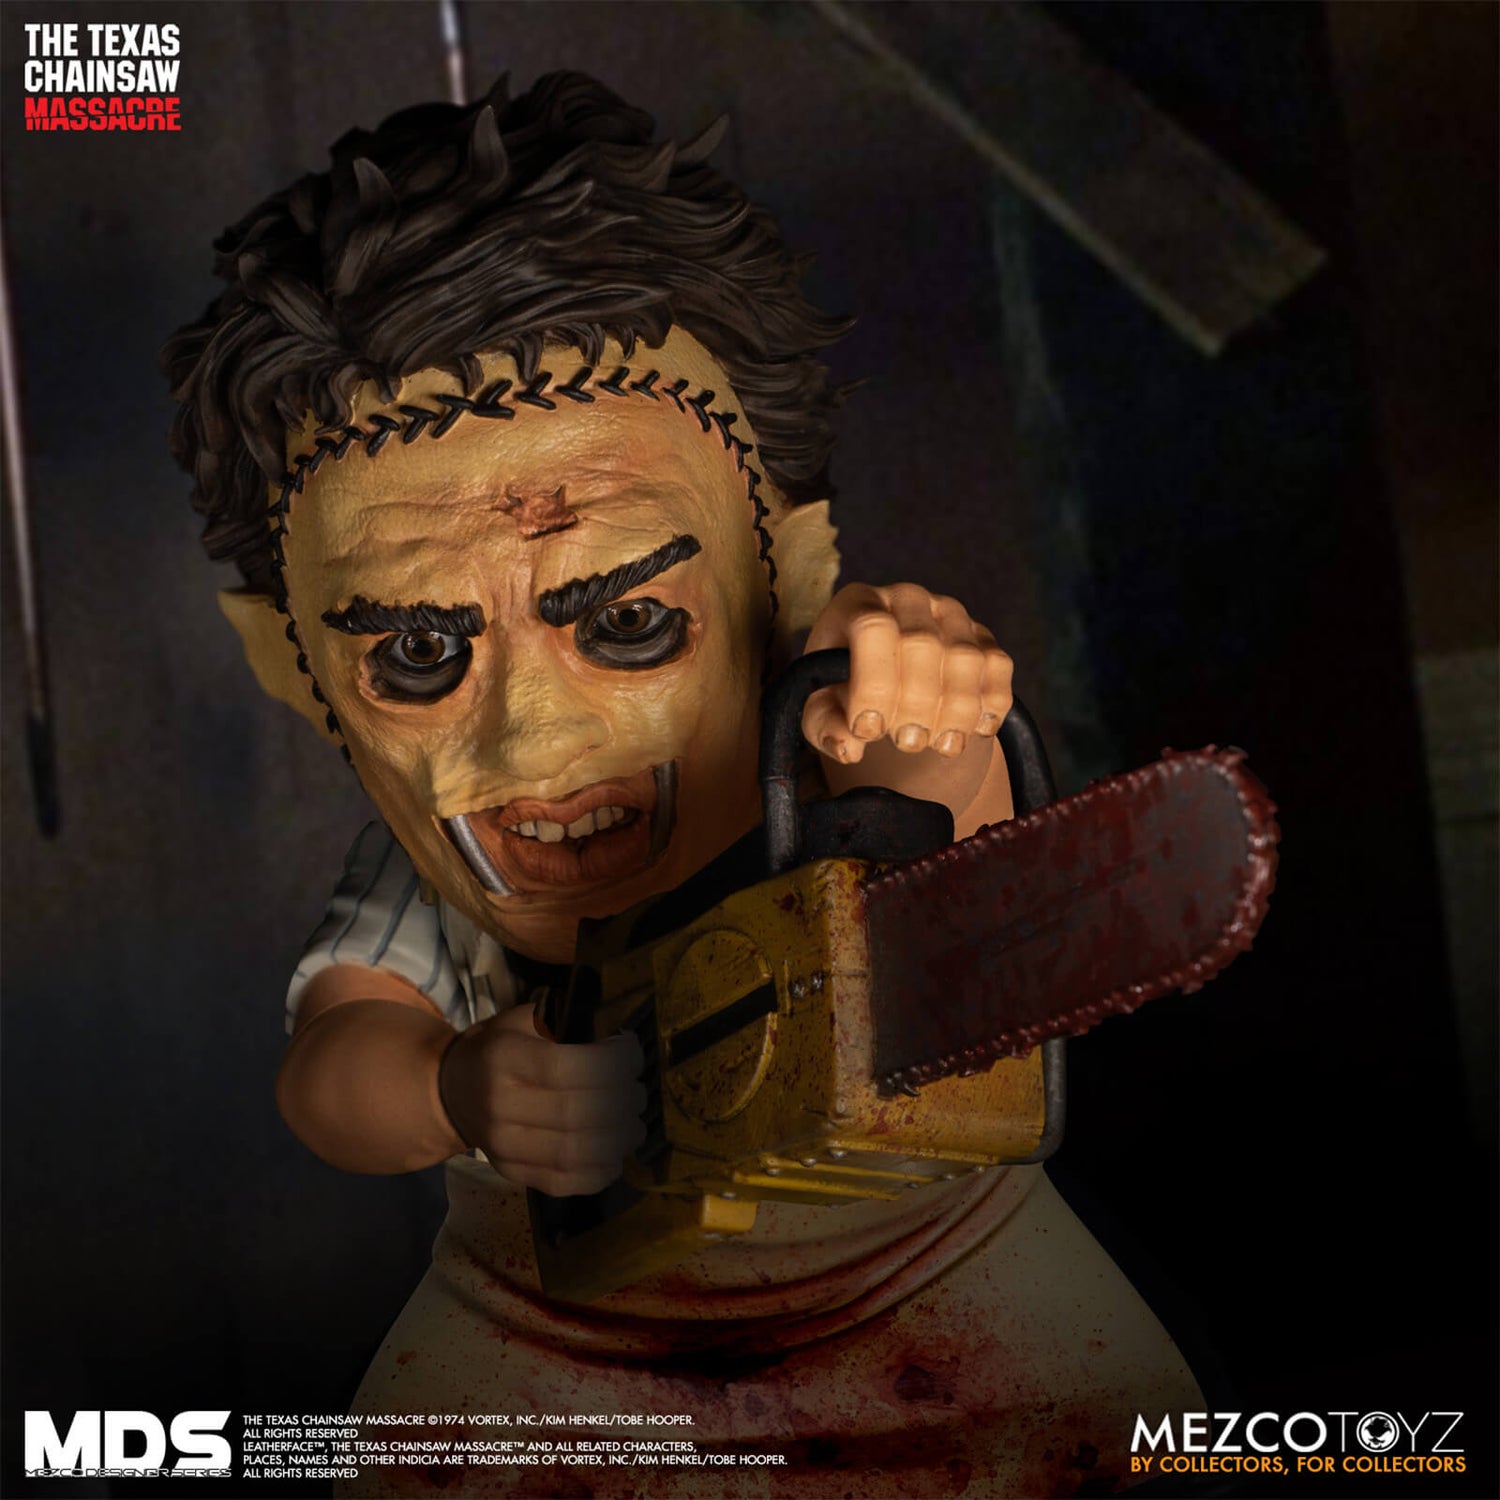 Mezco Designer Series Texas Chainsaw Massacre Leatherface 6 Inch Figure